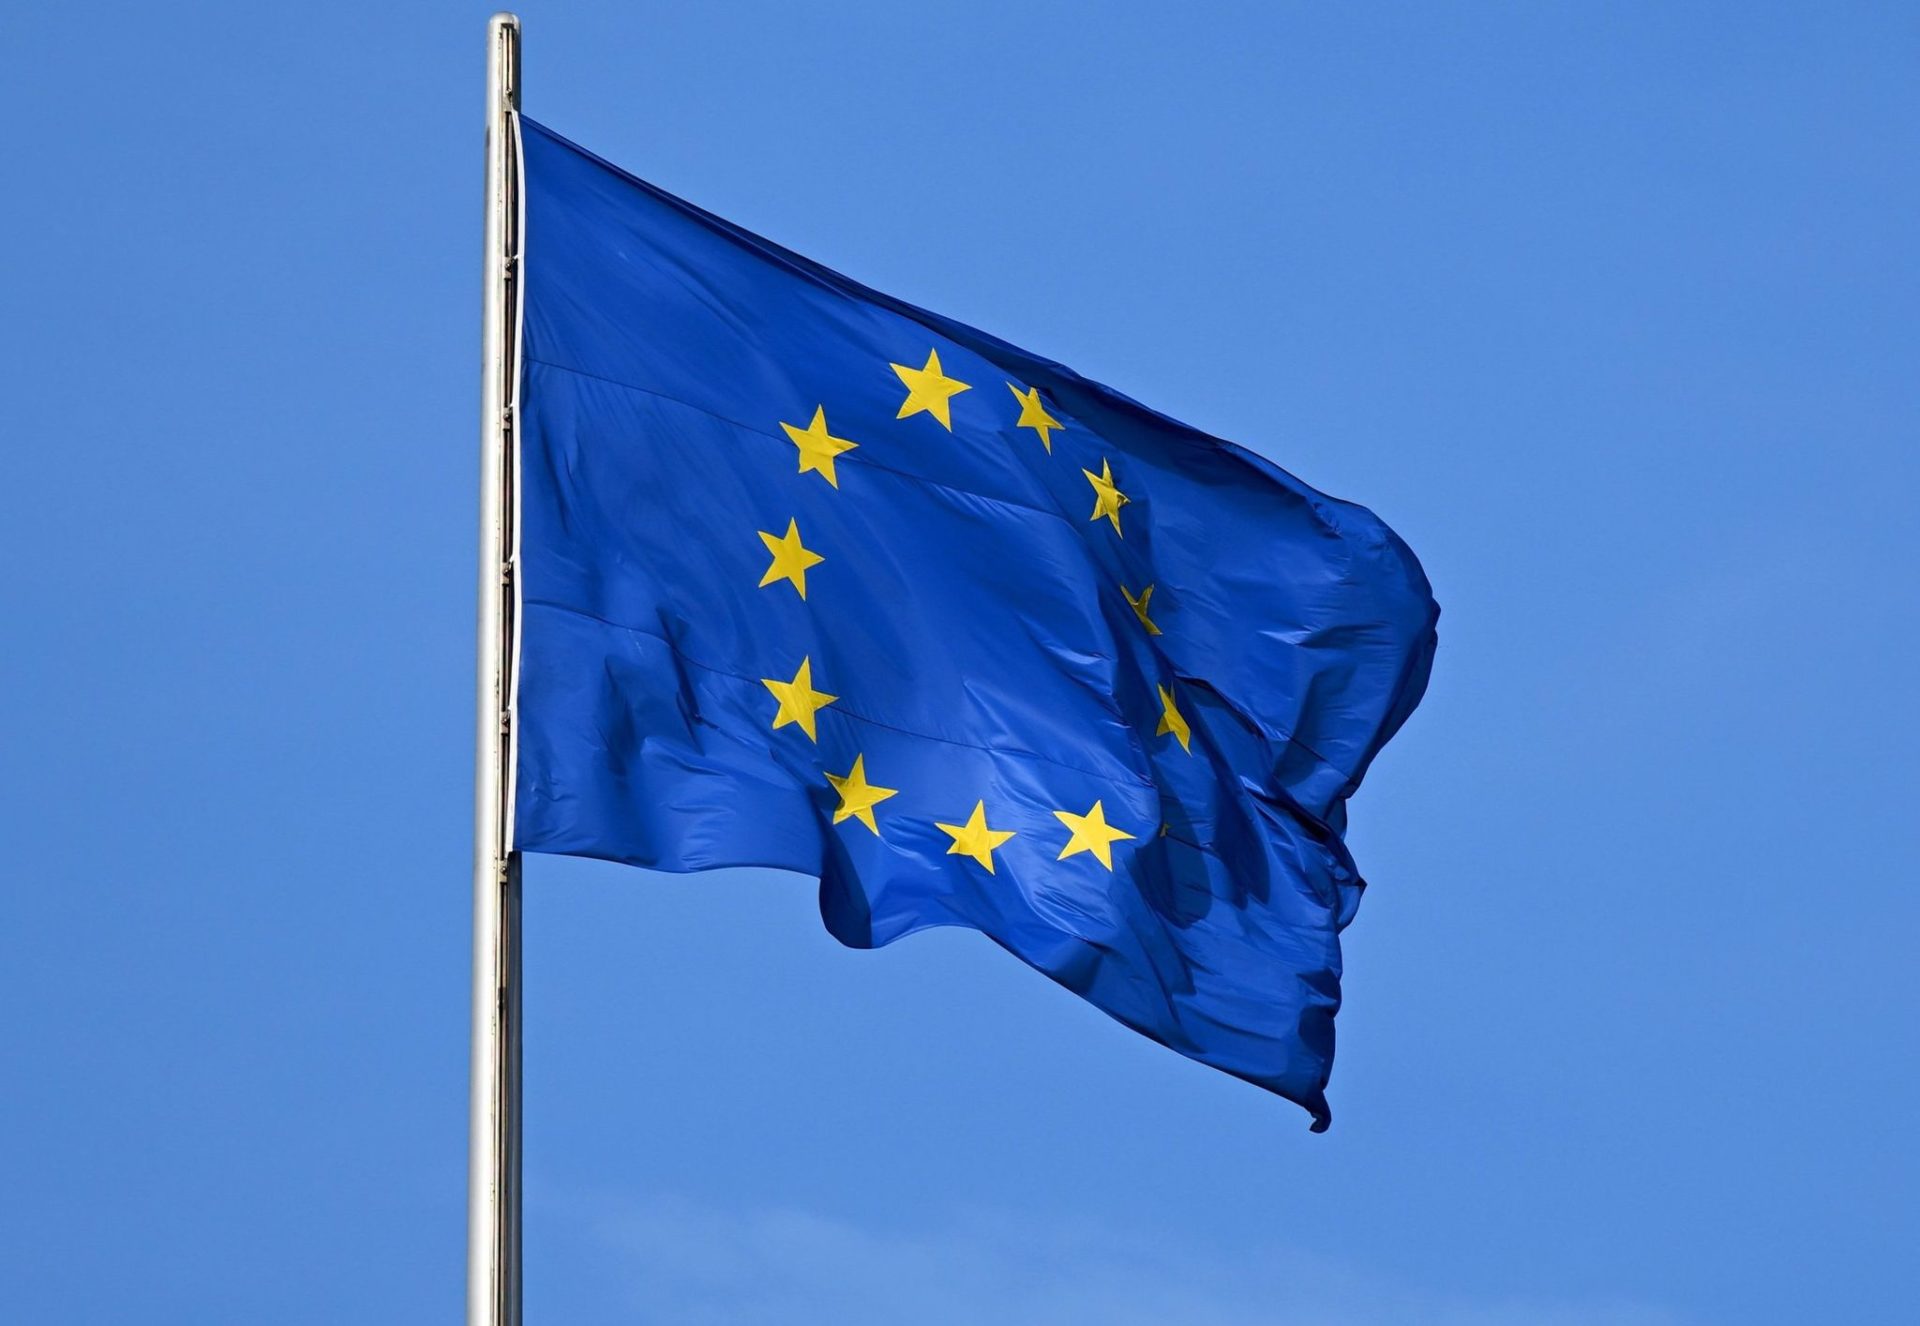 Europe in brief: European Commission hails UN Treaty of the High Seas